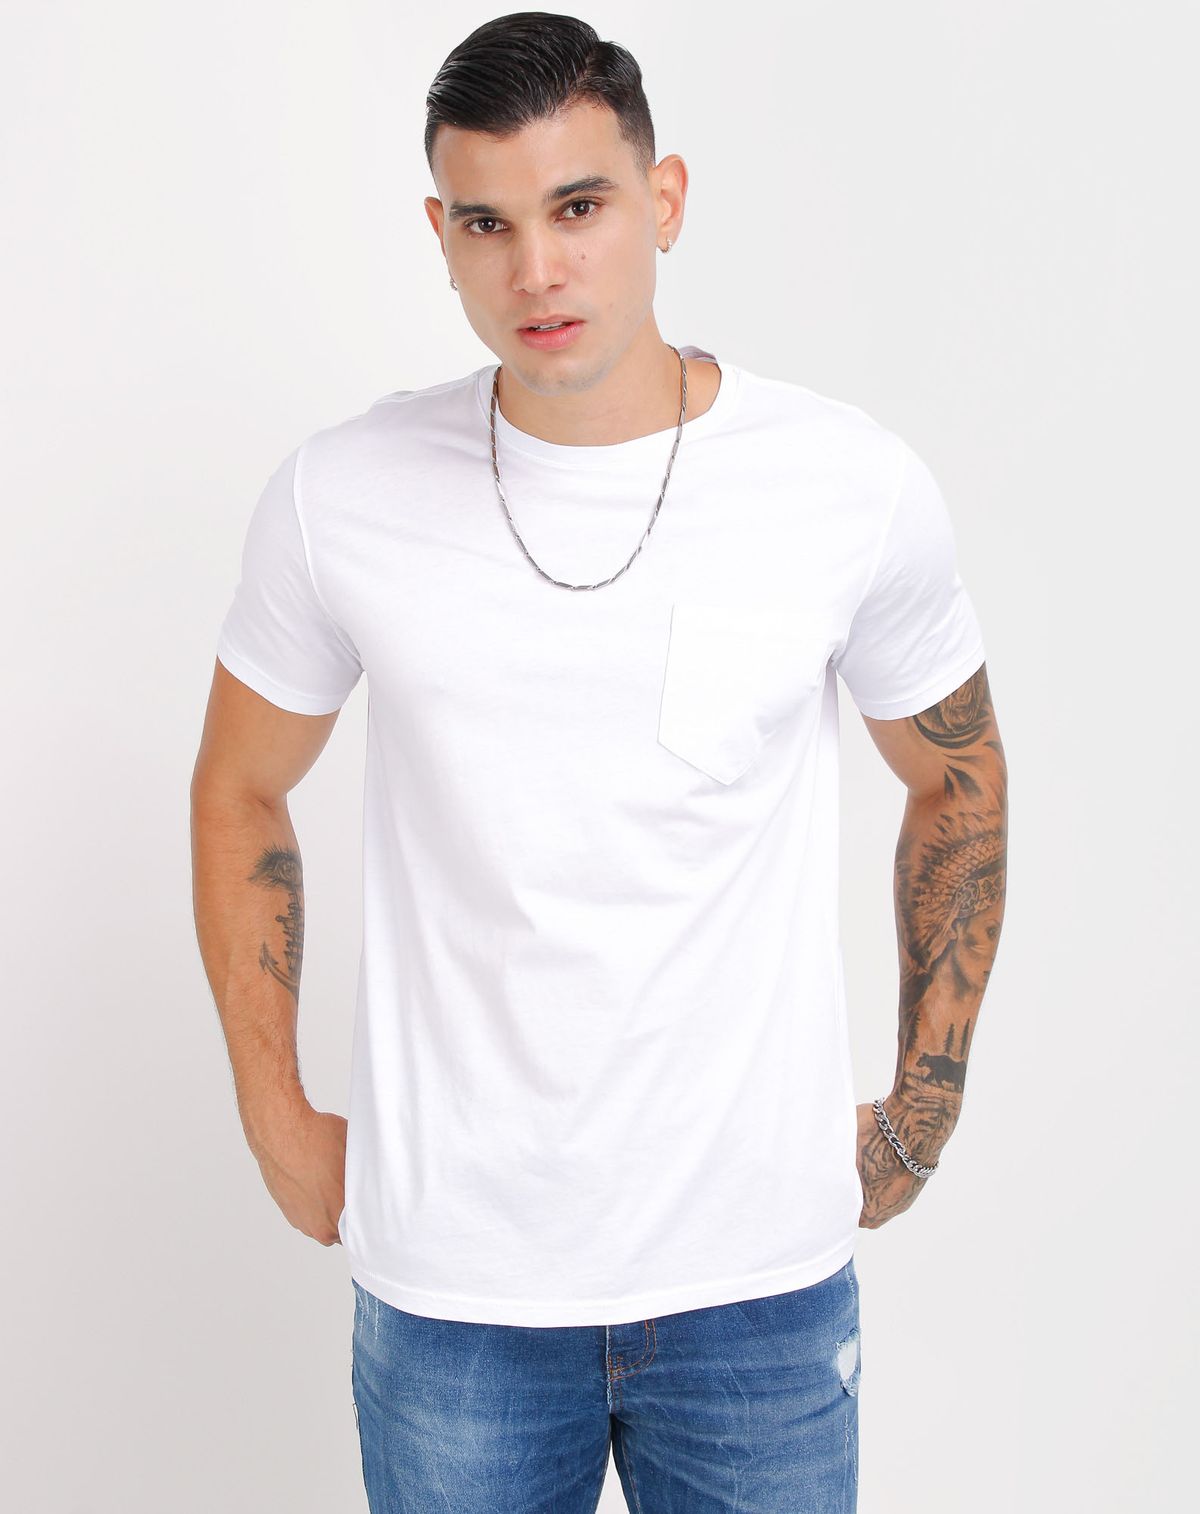 682646001-camiseta-manga-curta-masculina-bolsos-branco-p-fb6